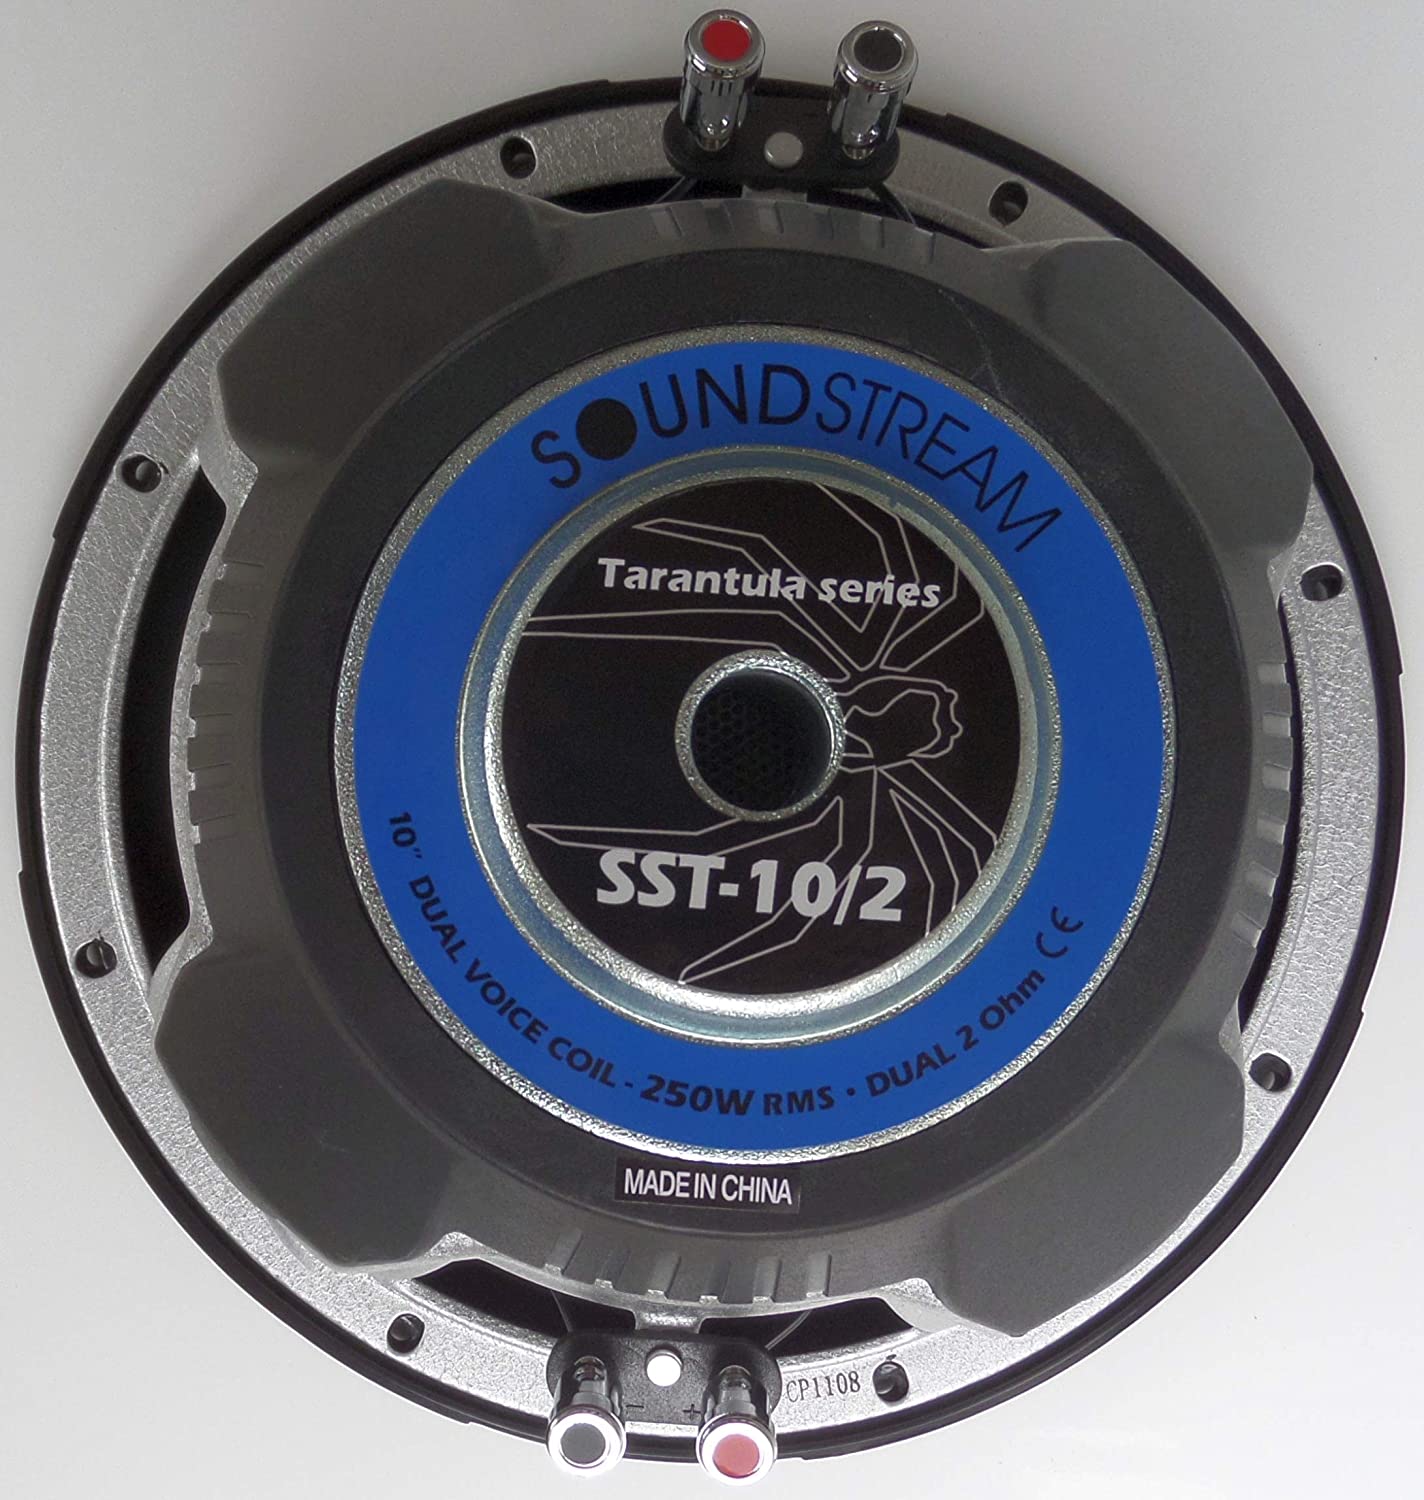 Subwoofer Soundstream Tarantula SST-10/2 10" 250W RMS Dual 2 ohm